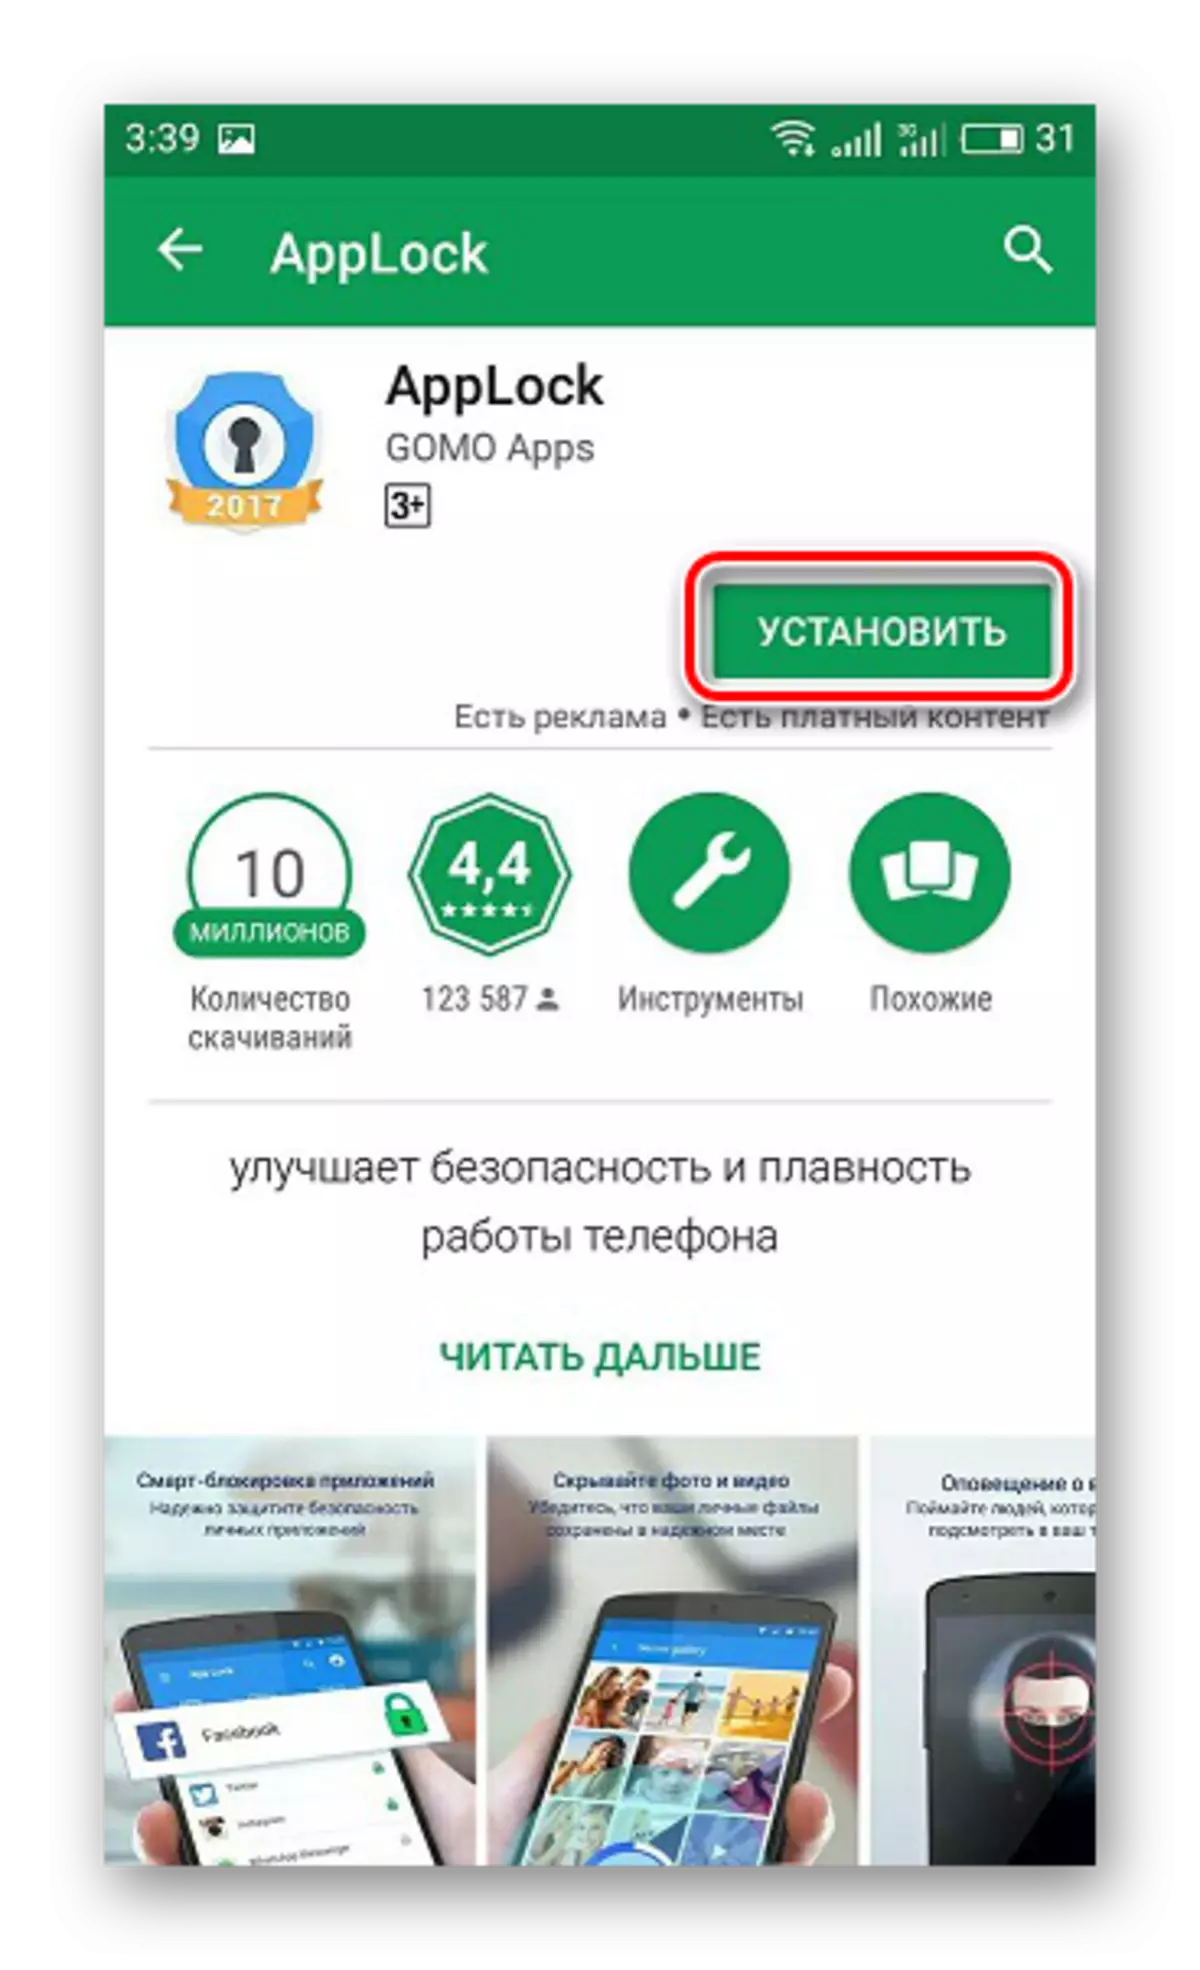 Download AppLock with Google Play Market